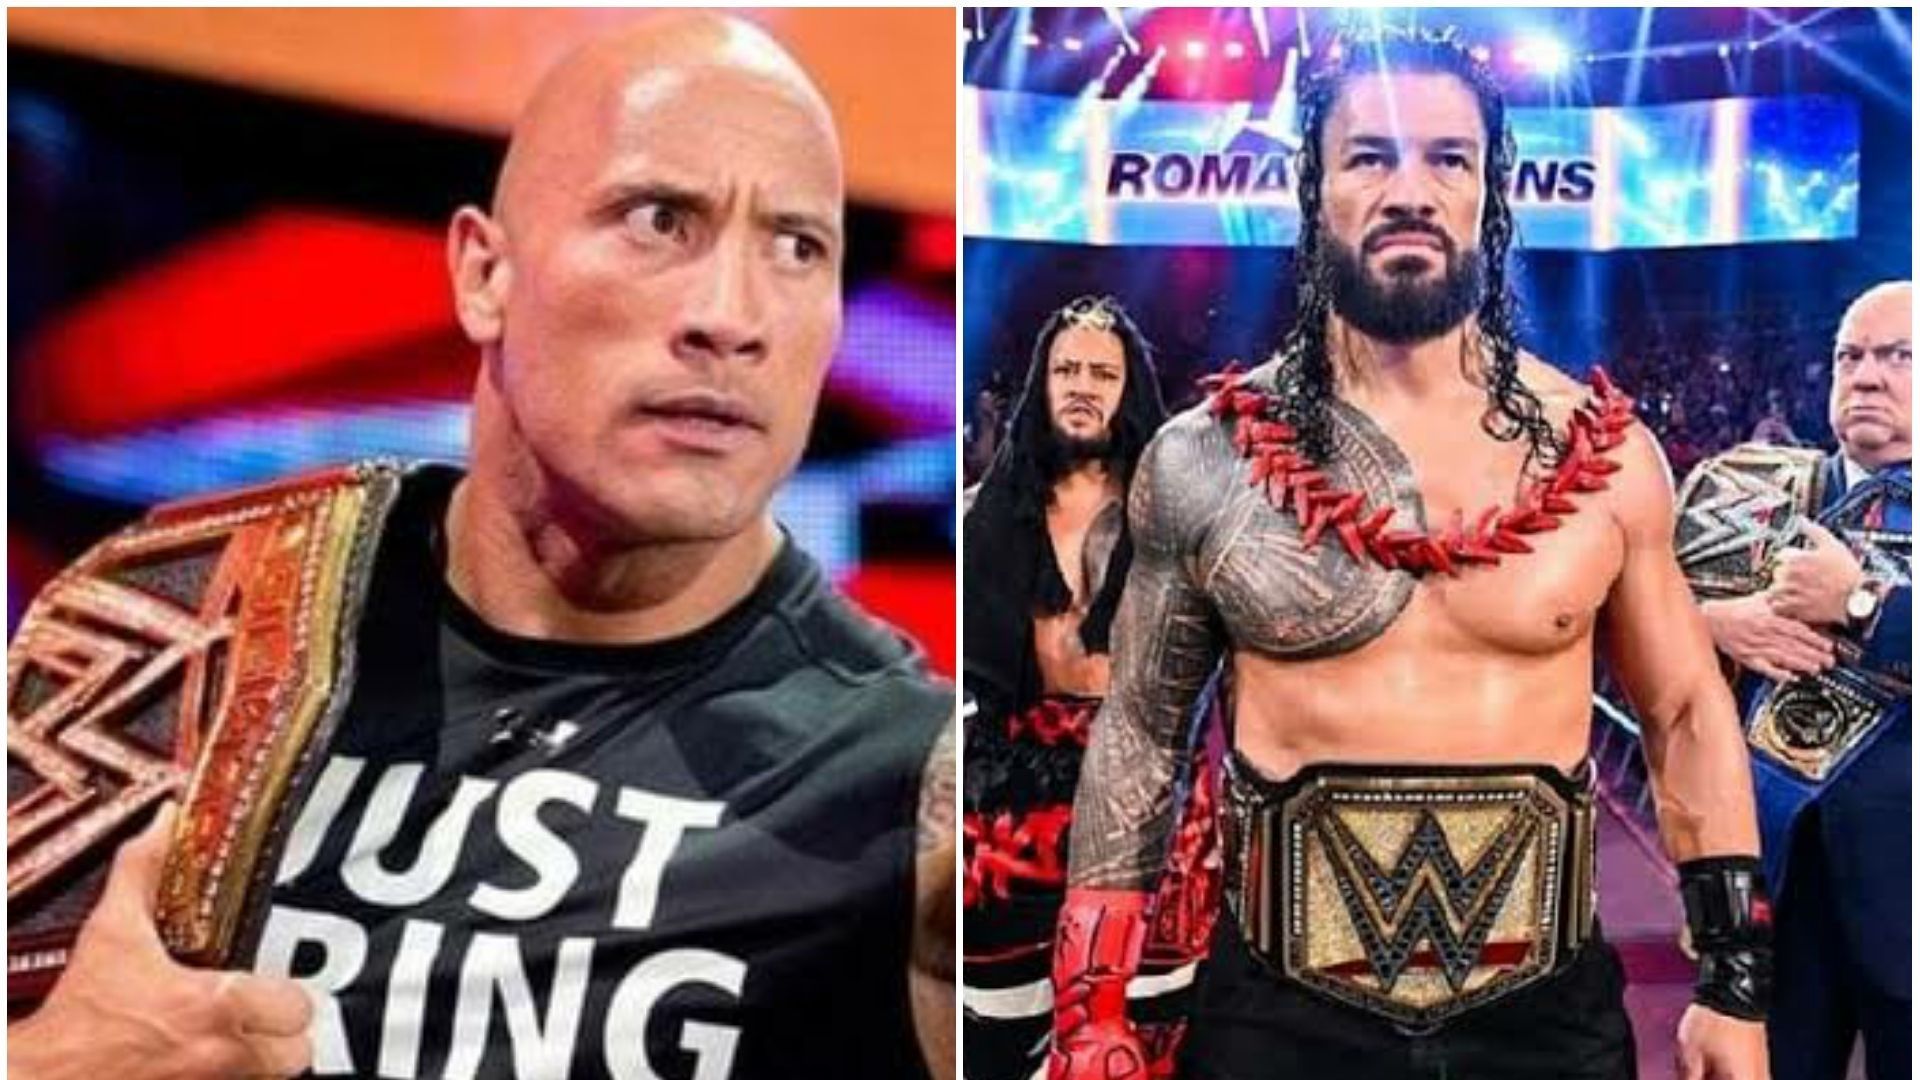 Roman Reigns vs. The Rock could still happen in WWE.